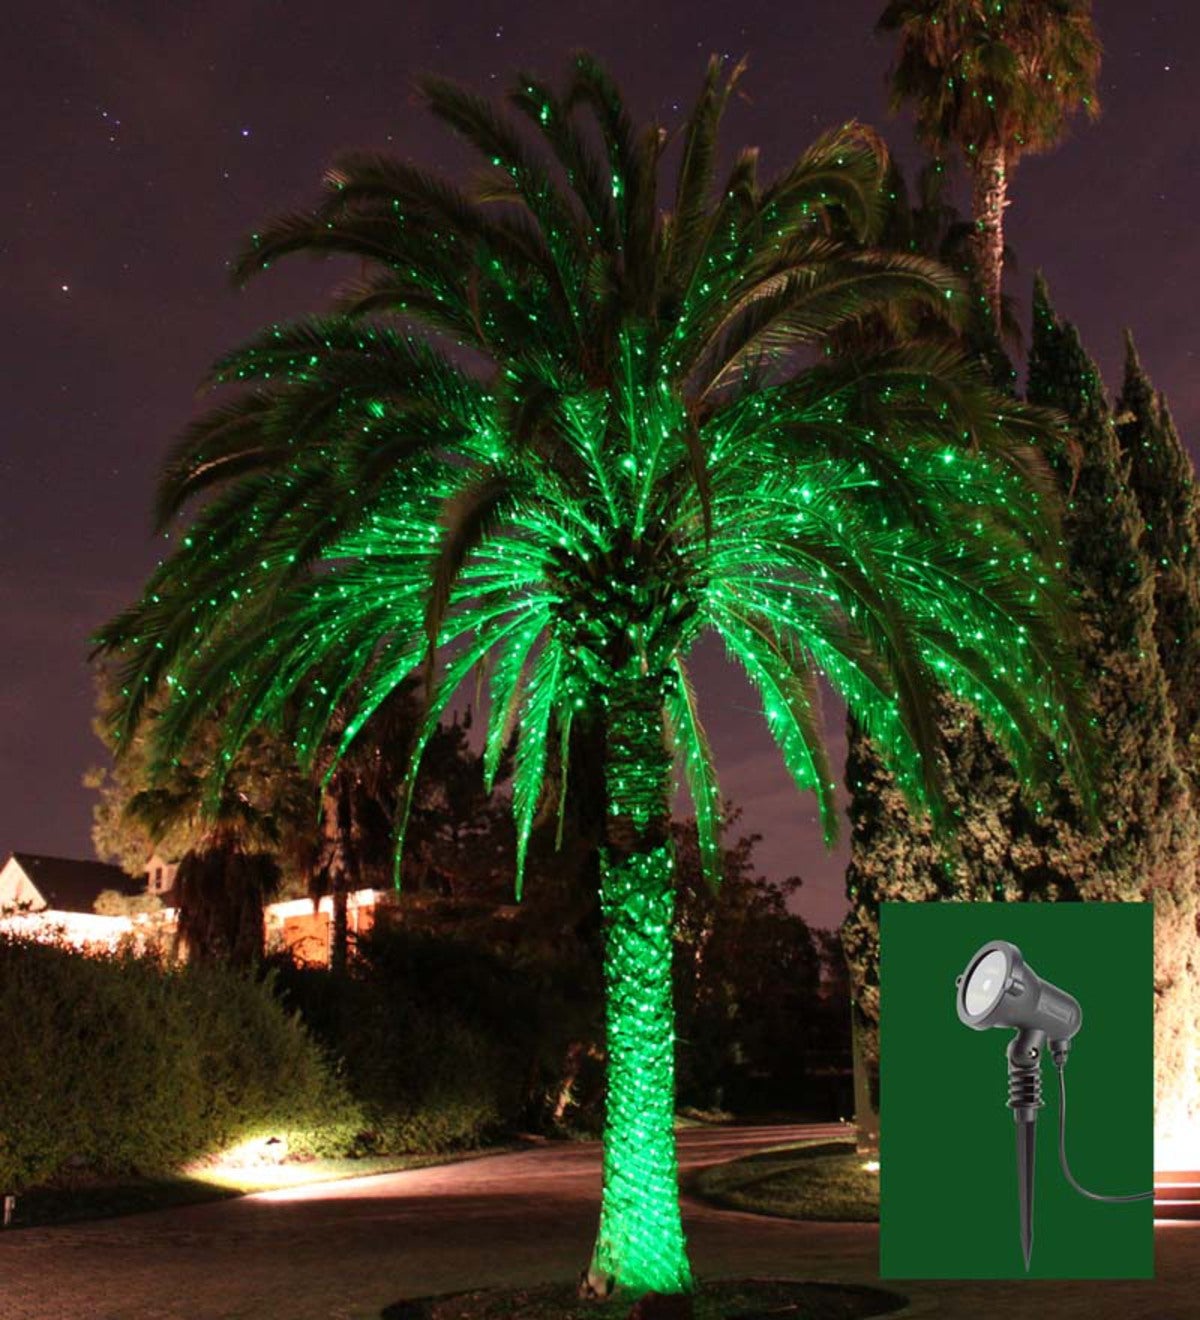 USA-Made Firefly Decorative Landscape Lighting - Green